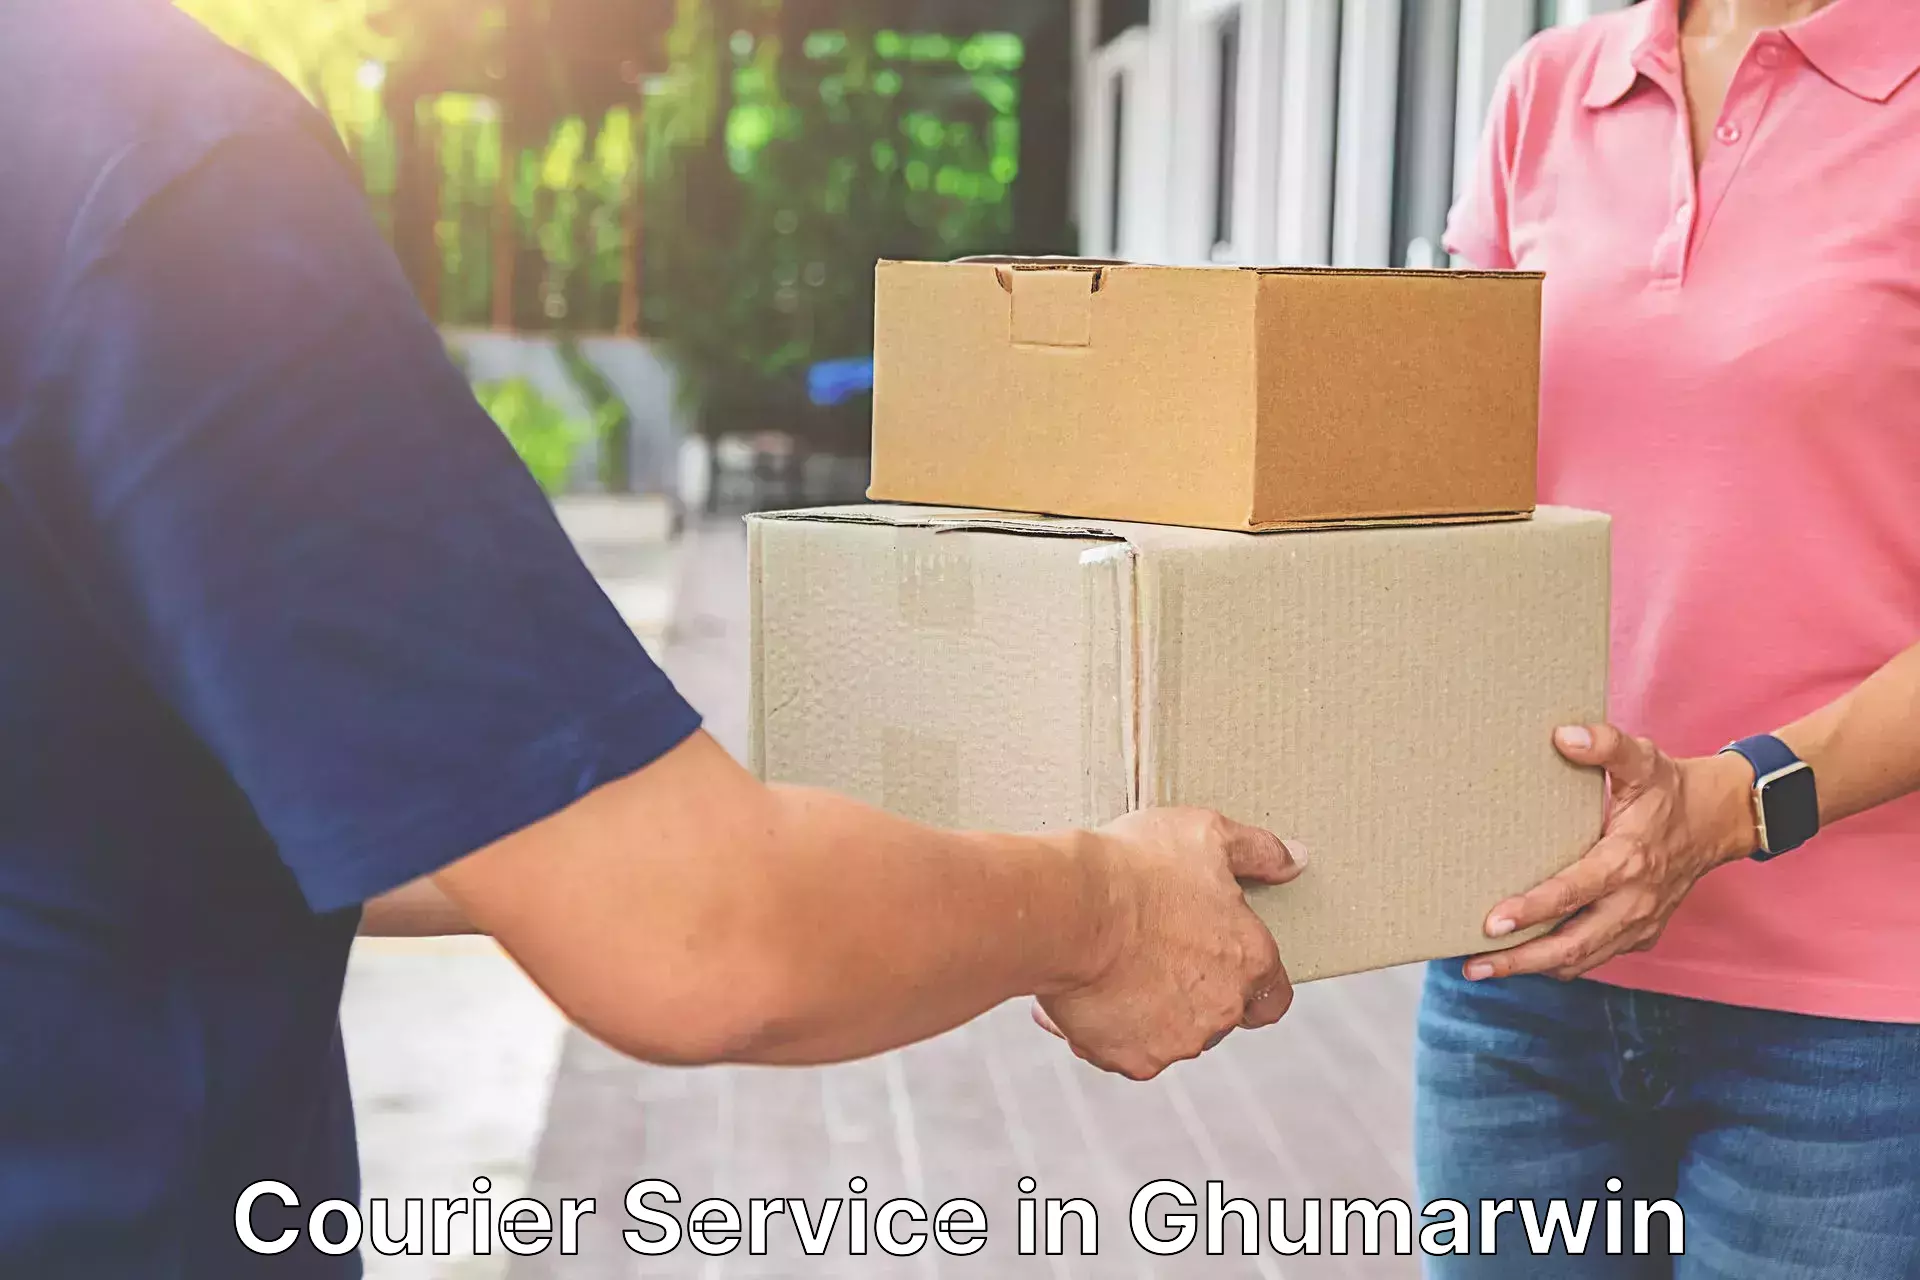 Versatile courier offerings in Ghumarwin